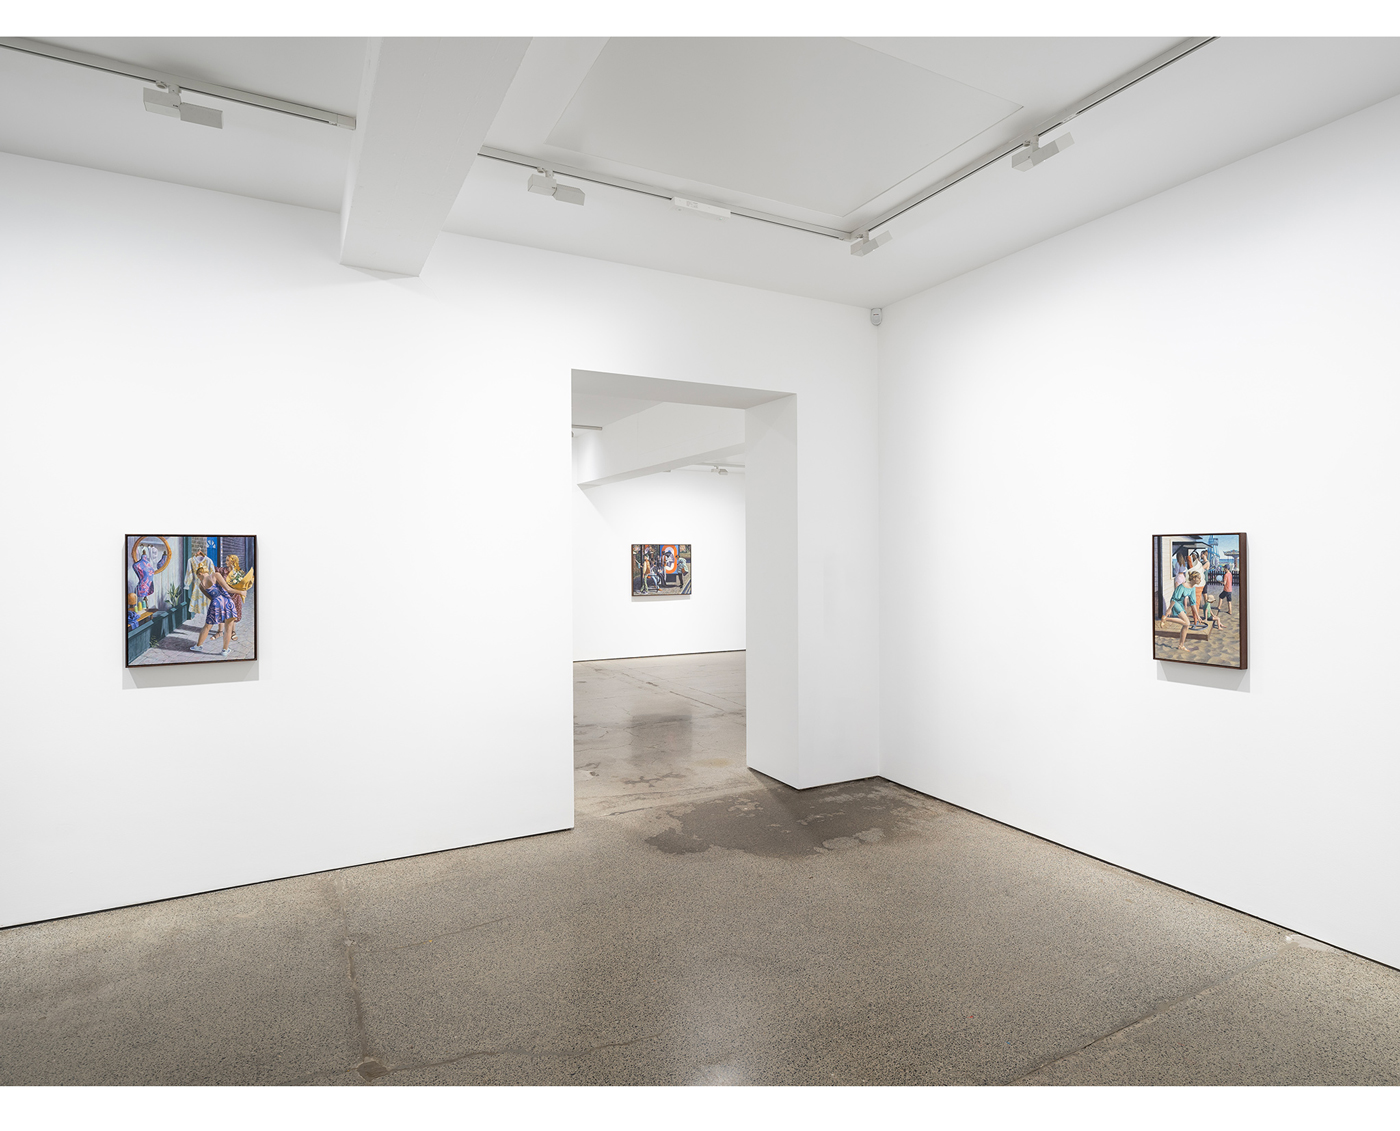 Benjamin Senior's major solo exhibition 'Minor Streets' at Carl Freedman Gallery